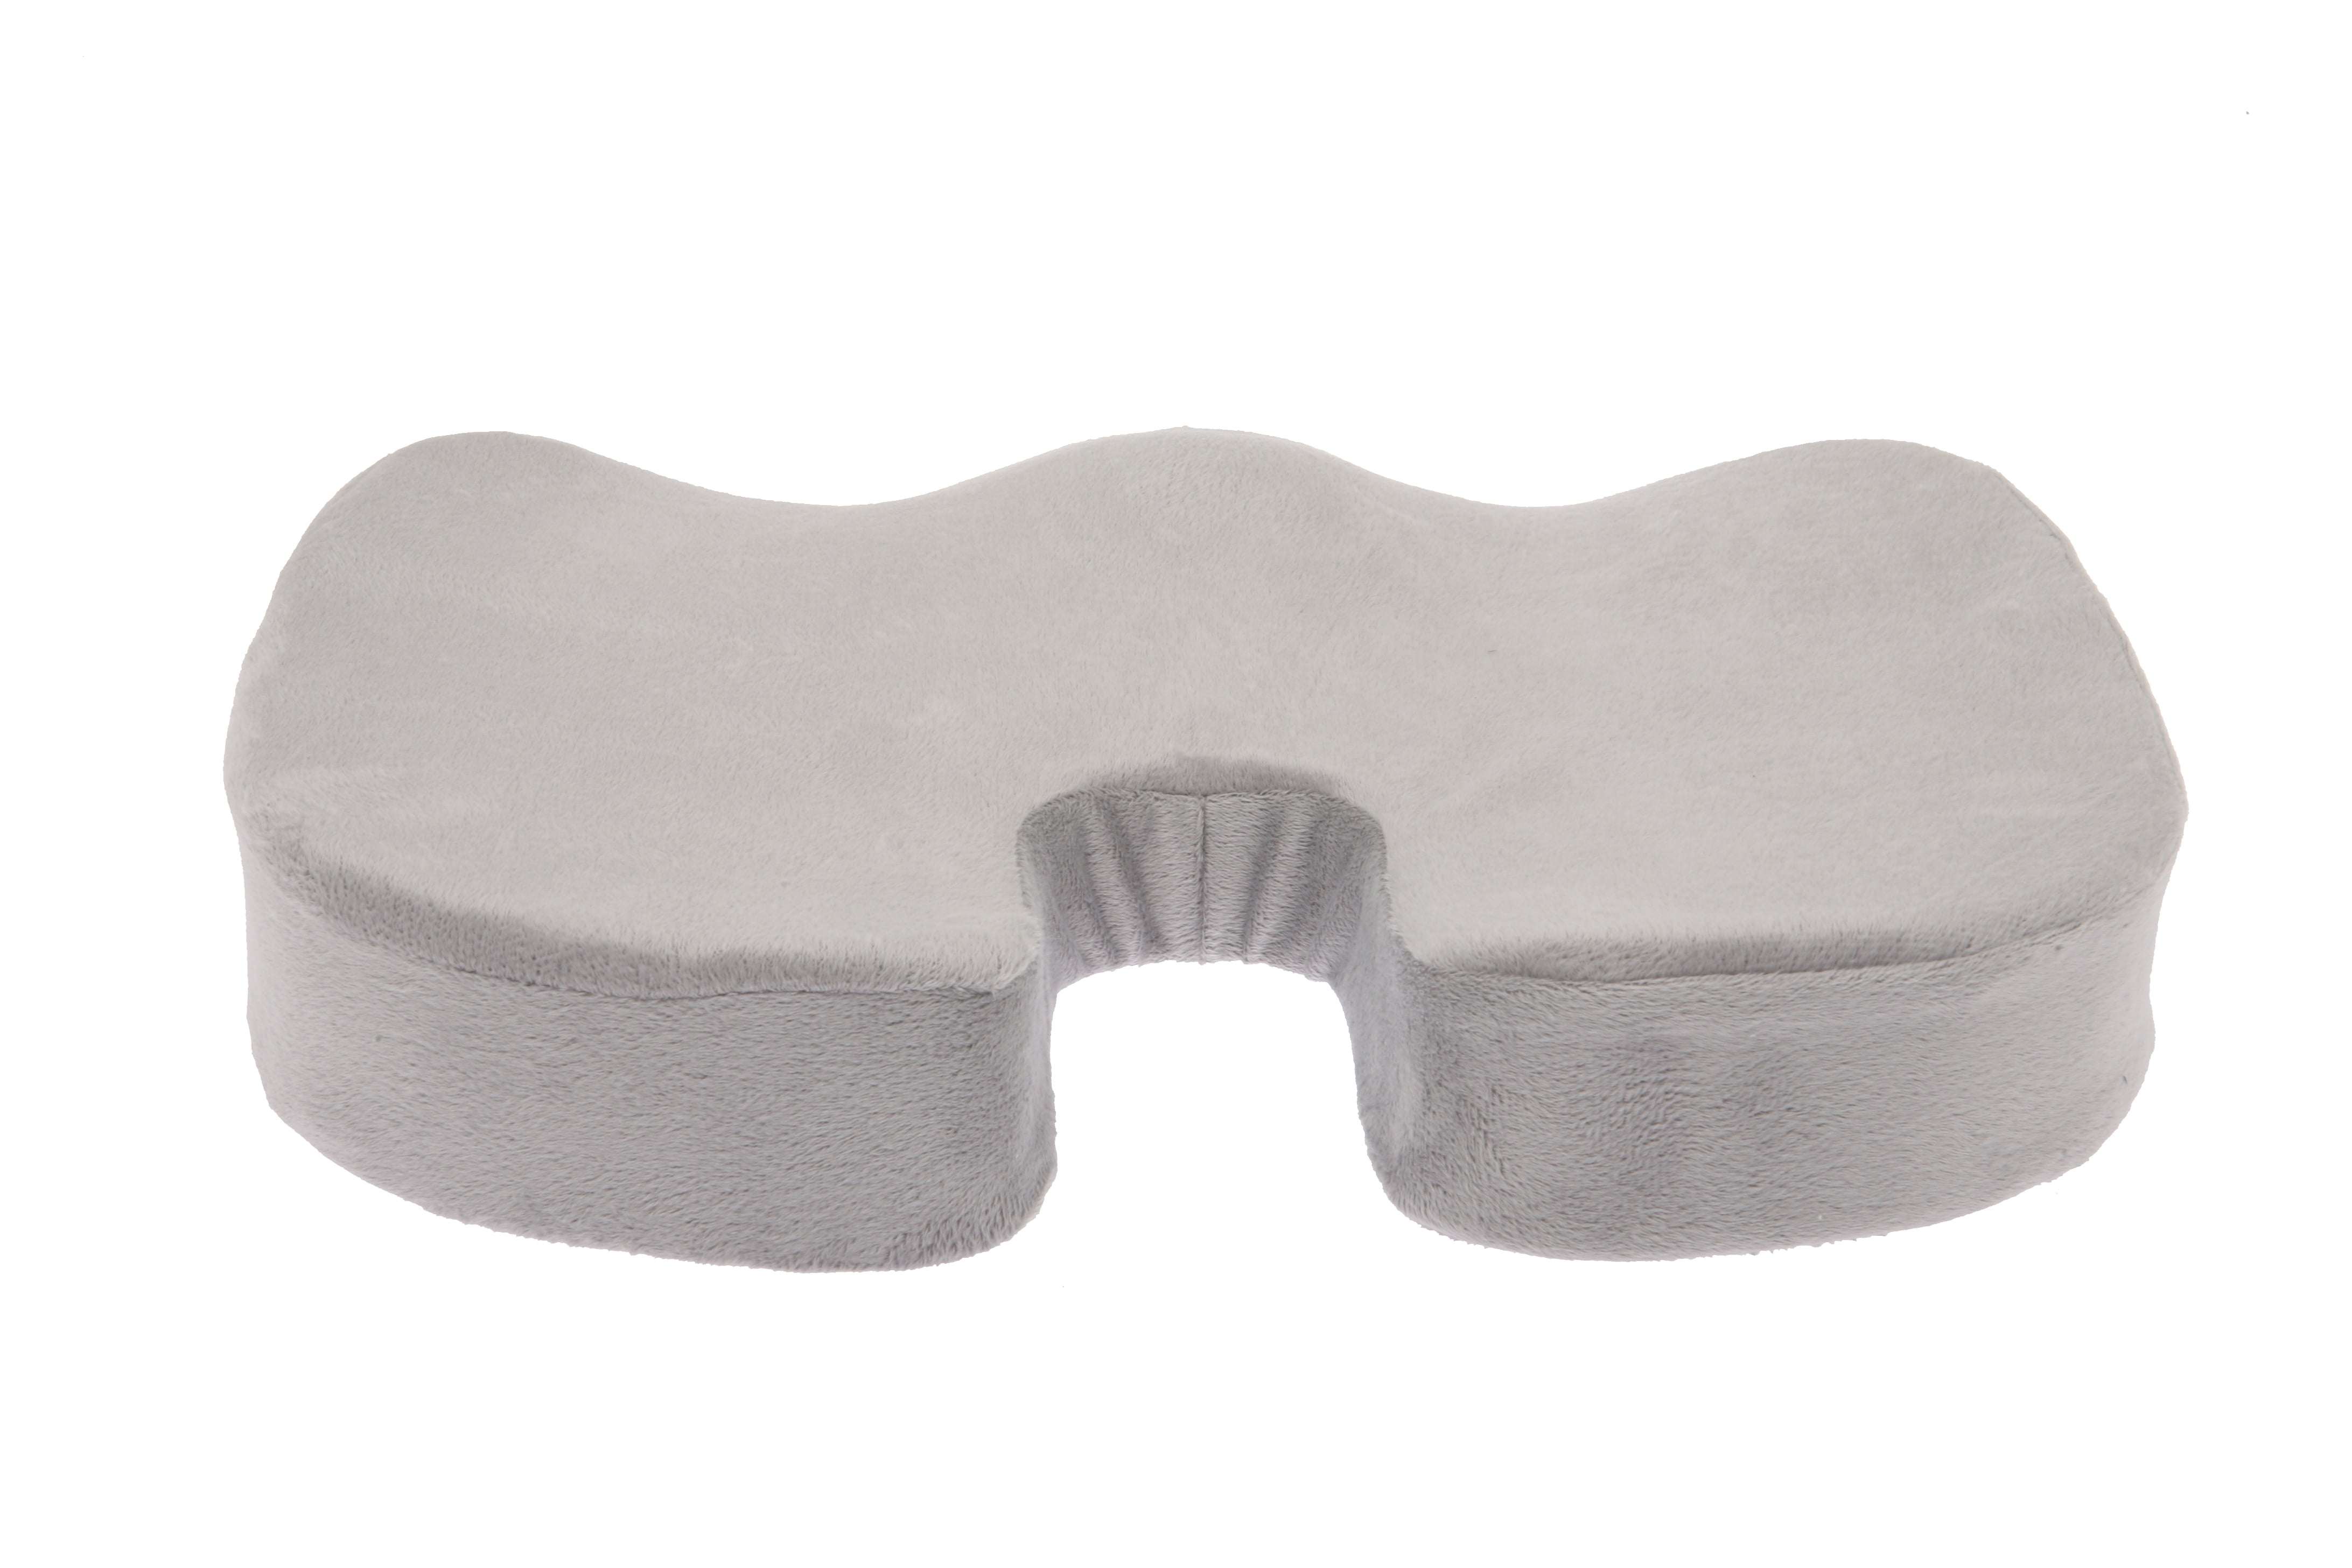 SOFTaCARE, Dark Gray Seat Cushion Coccyx Orthopedic Memory Foam and Lumbar  Set 2 